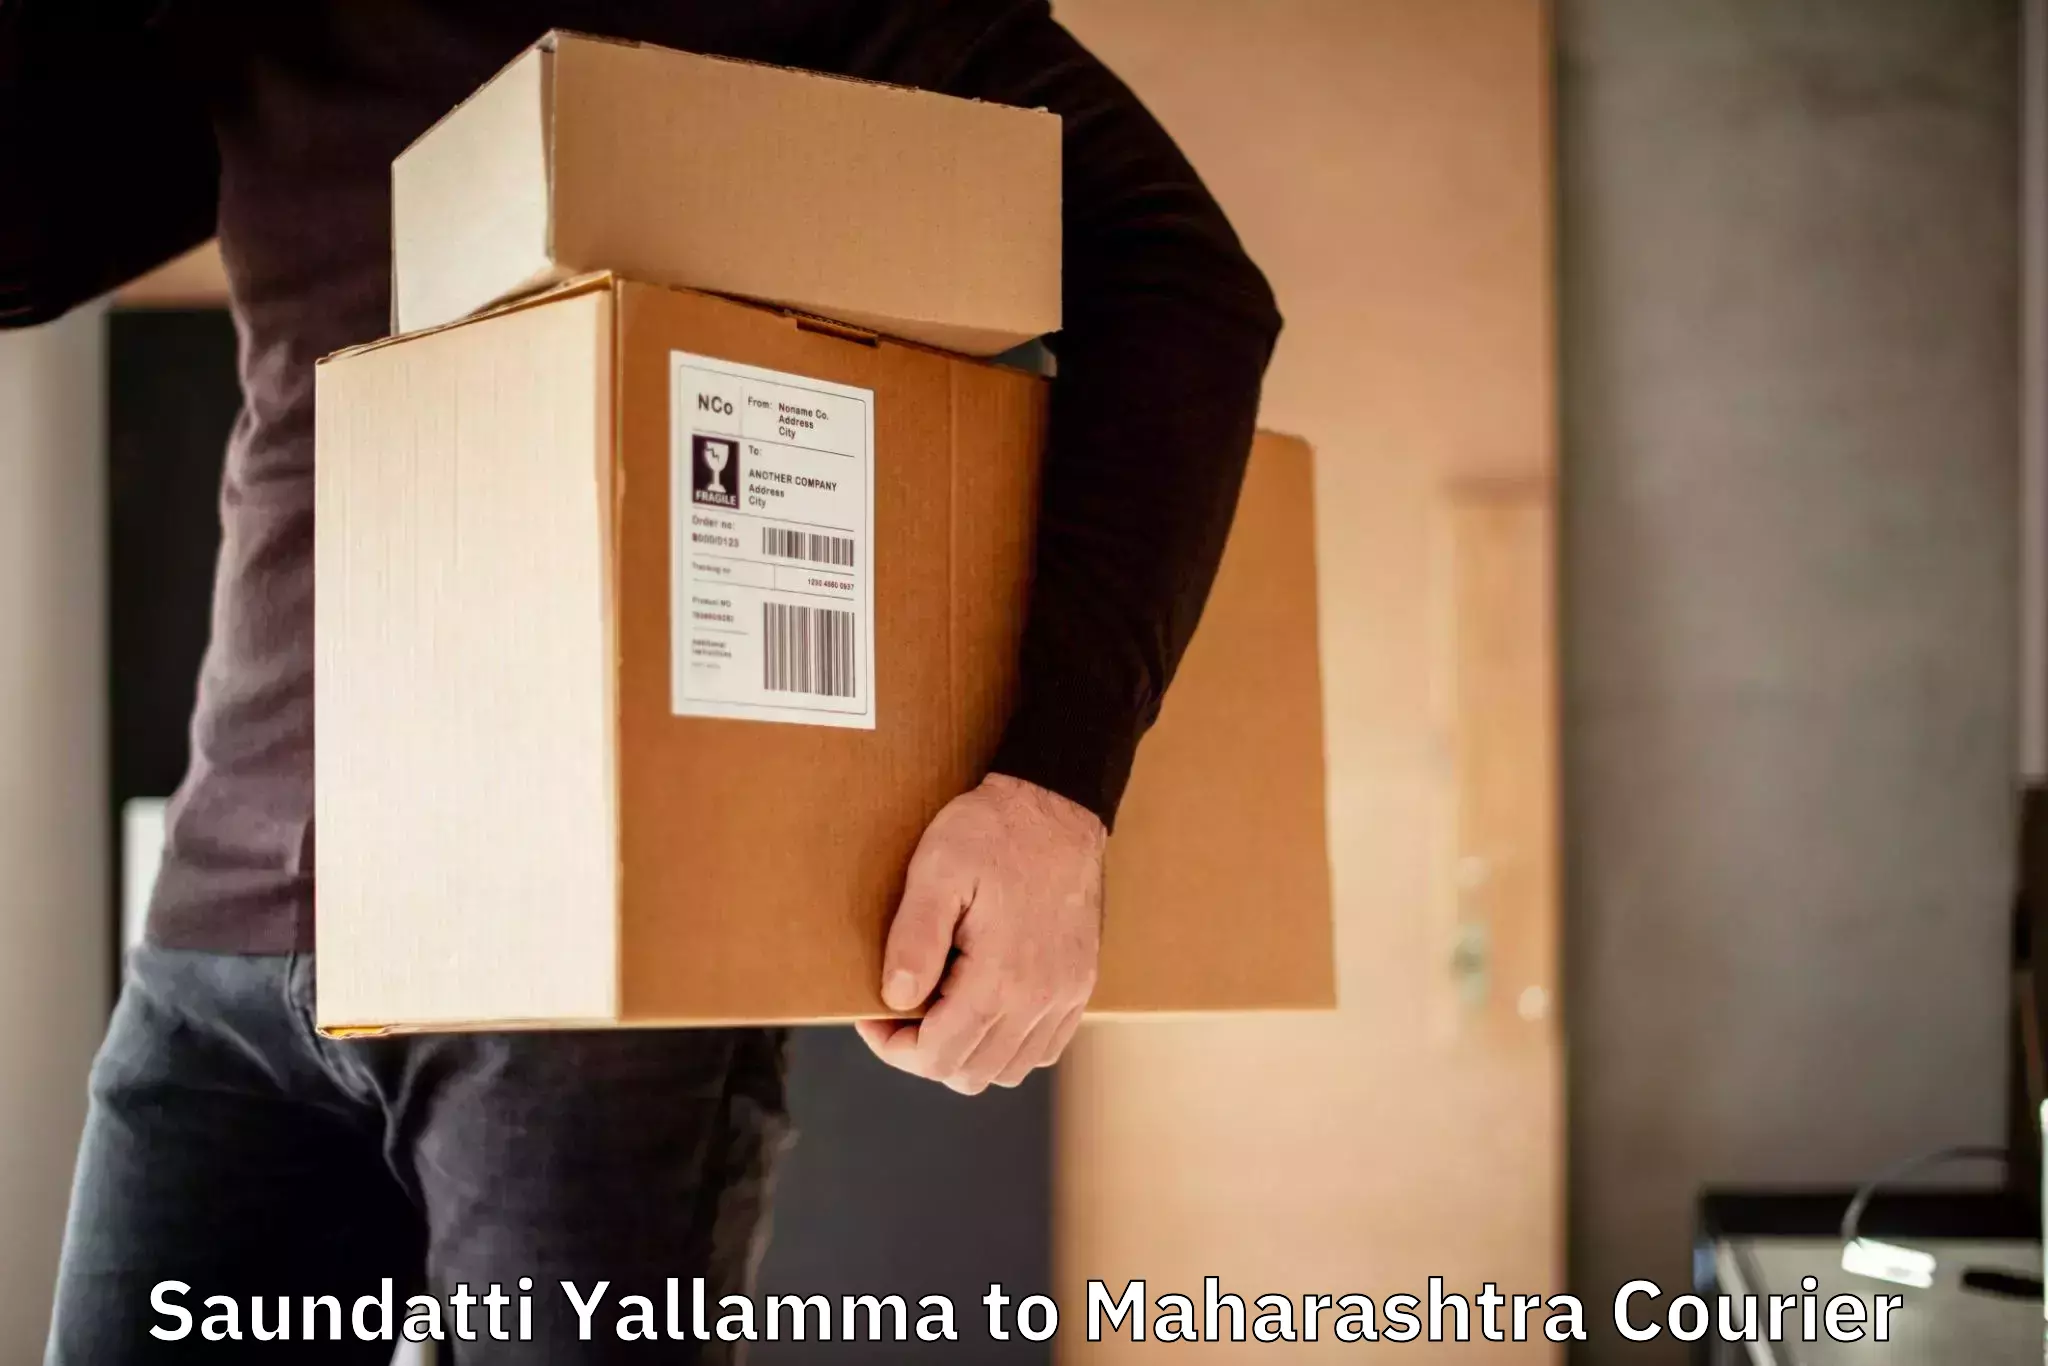 Express package handling Saundatti Yallamma to Virar